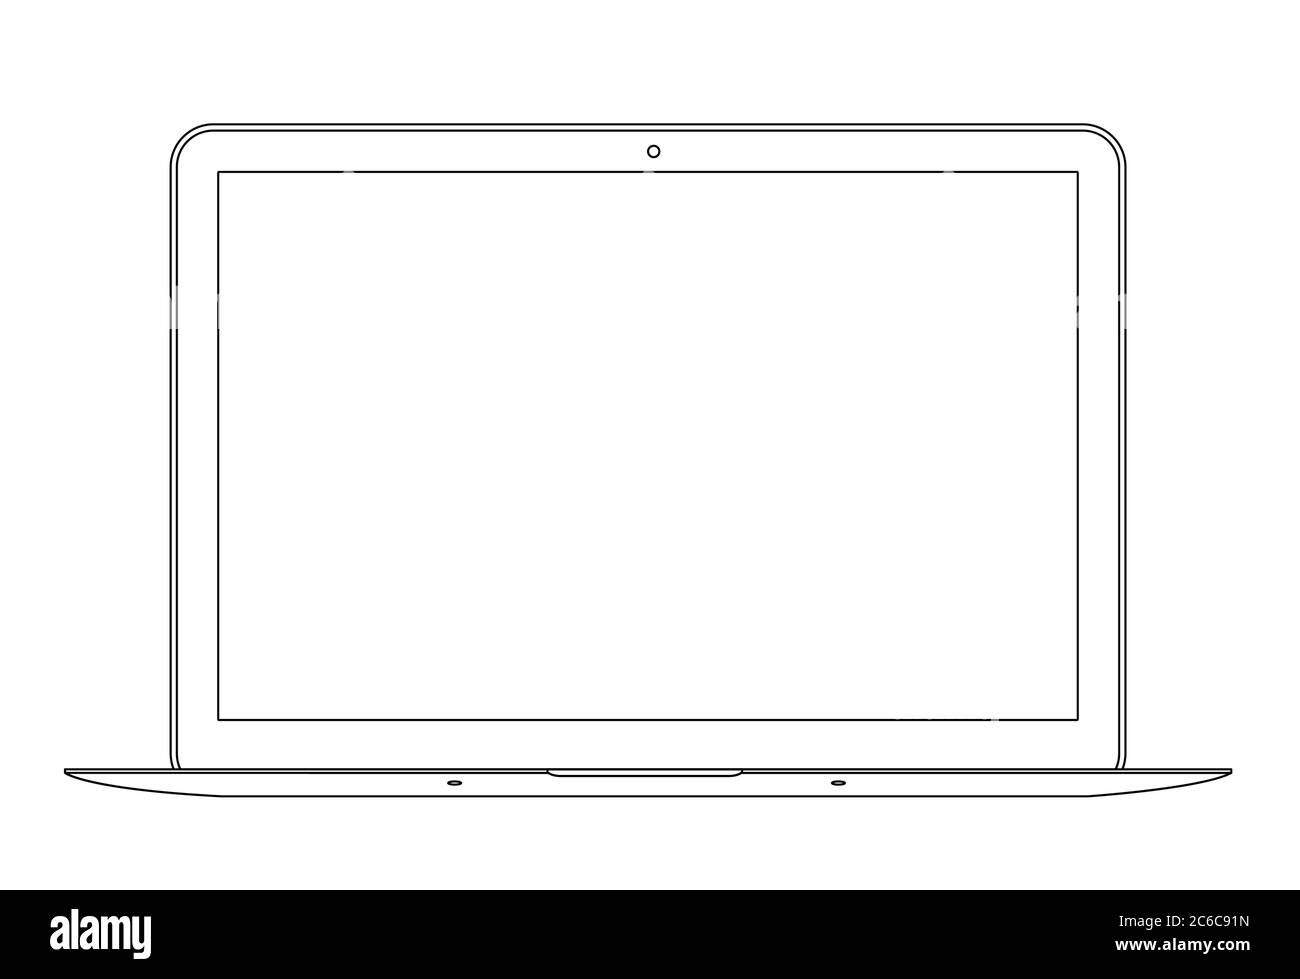 Umriss Zeichnung Laptop. Elegantes, schlankes Design. Vektorgrafik Stock Vektor